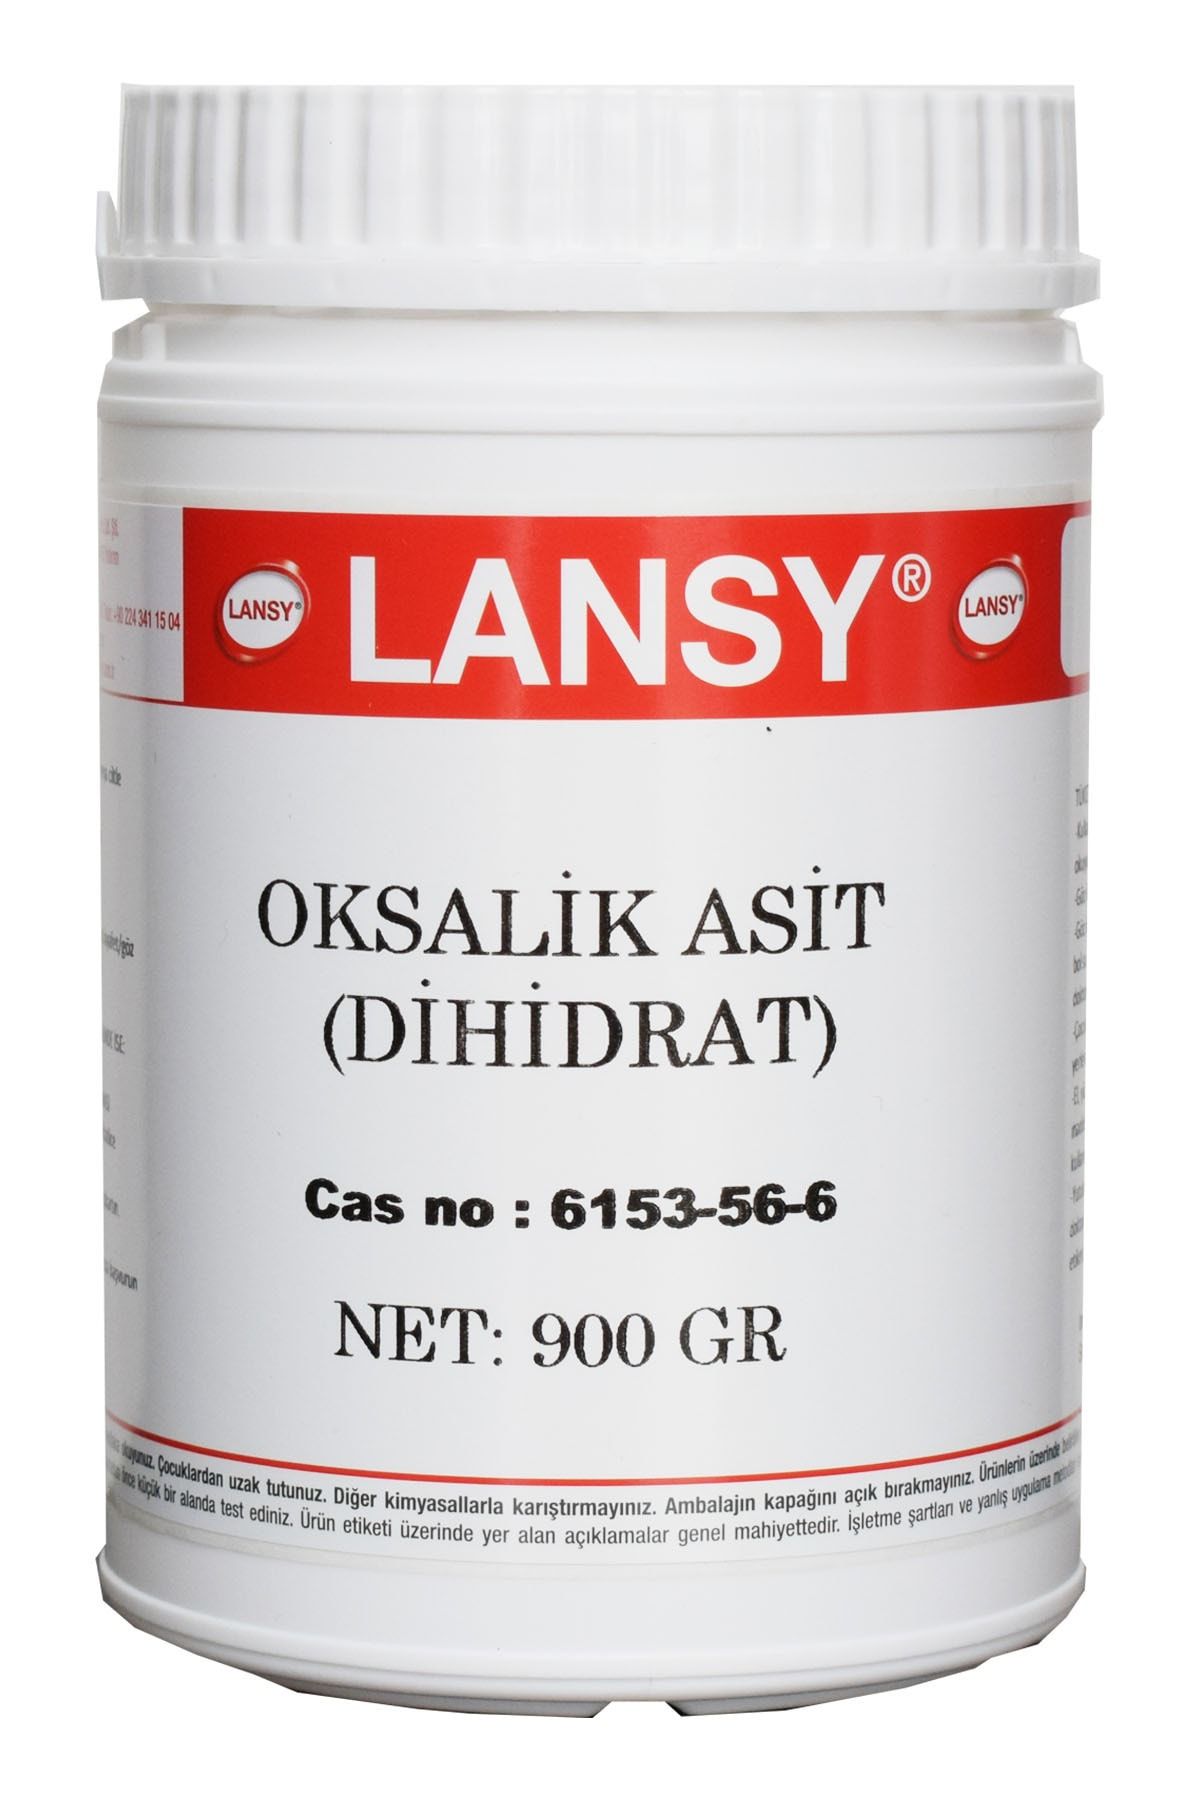 lansy Oksalik Asit 900 Gr (dihidrat) %99